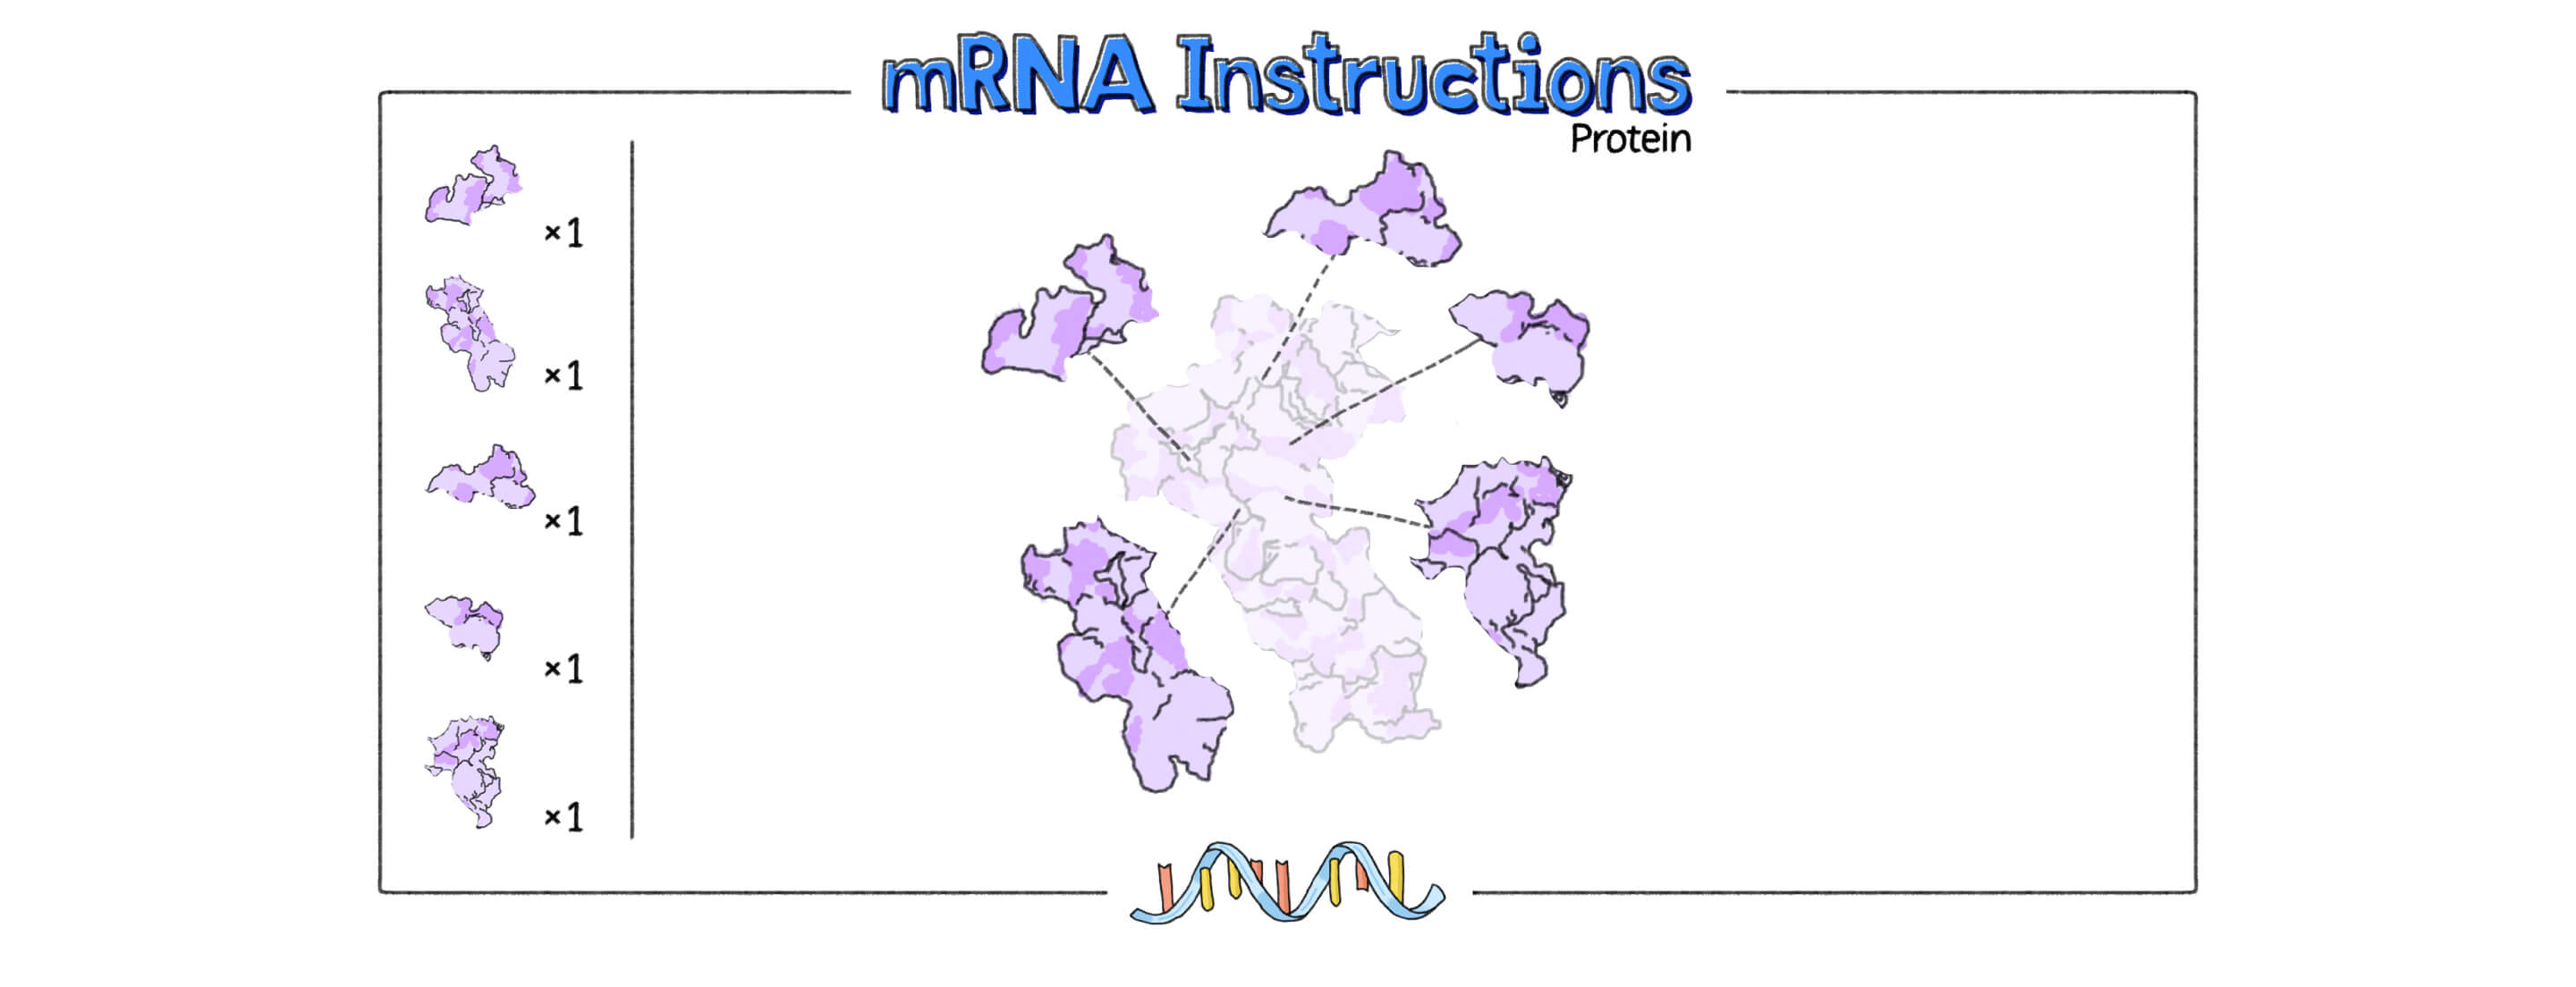 mRNA_Part01_Image01-white-space.jpg